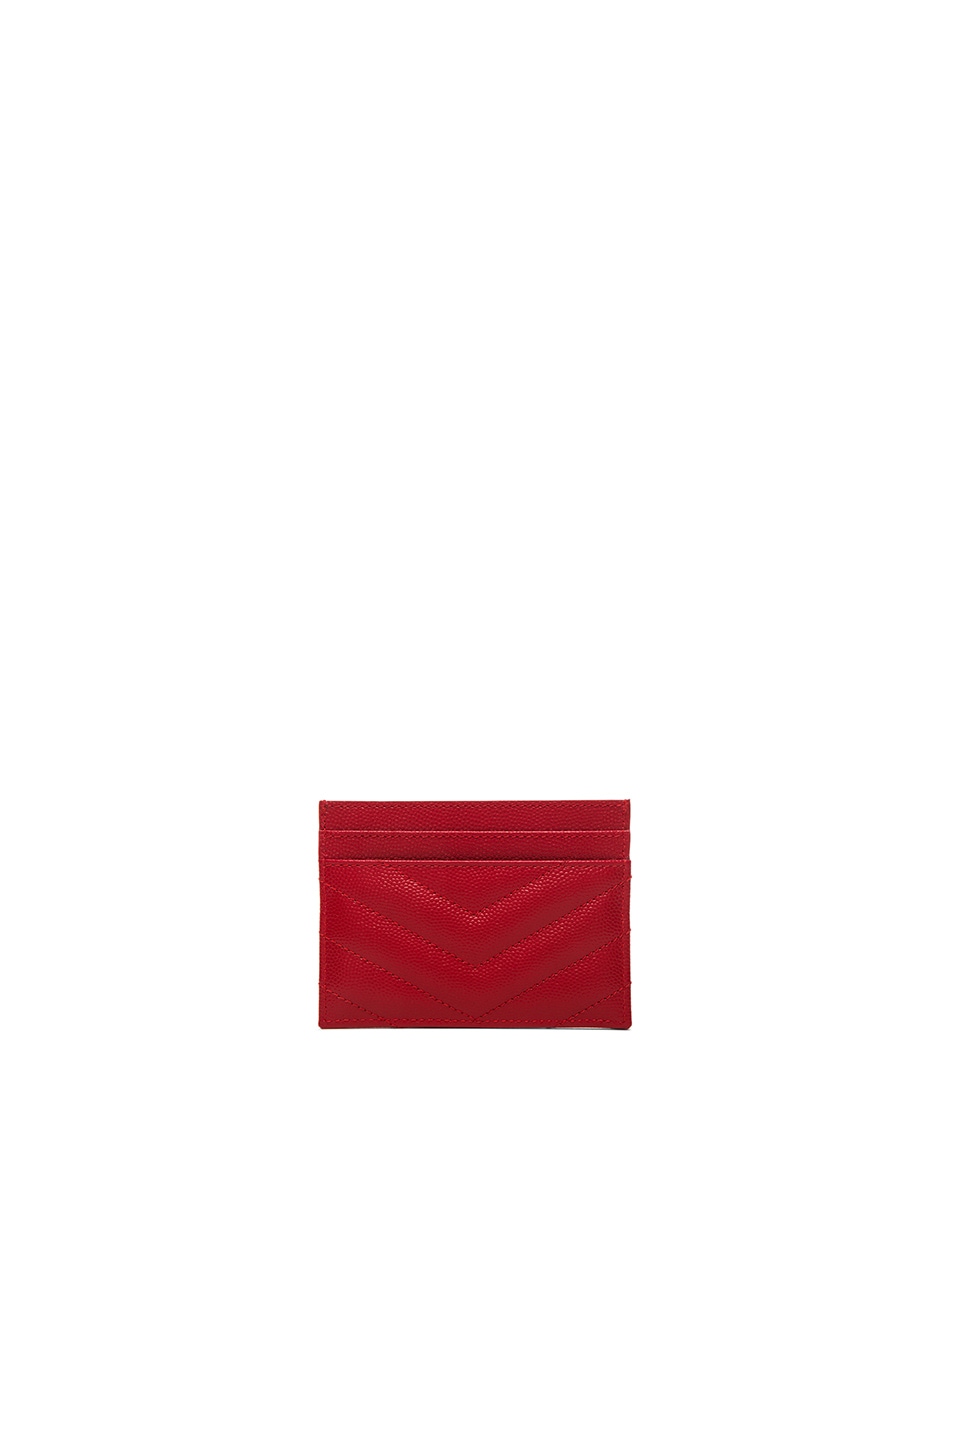 discount ysl handbags - Saint Laurent Monogram Credit Card Case in New Red | FWRD